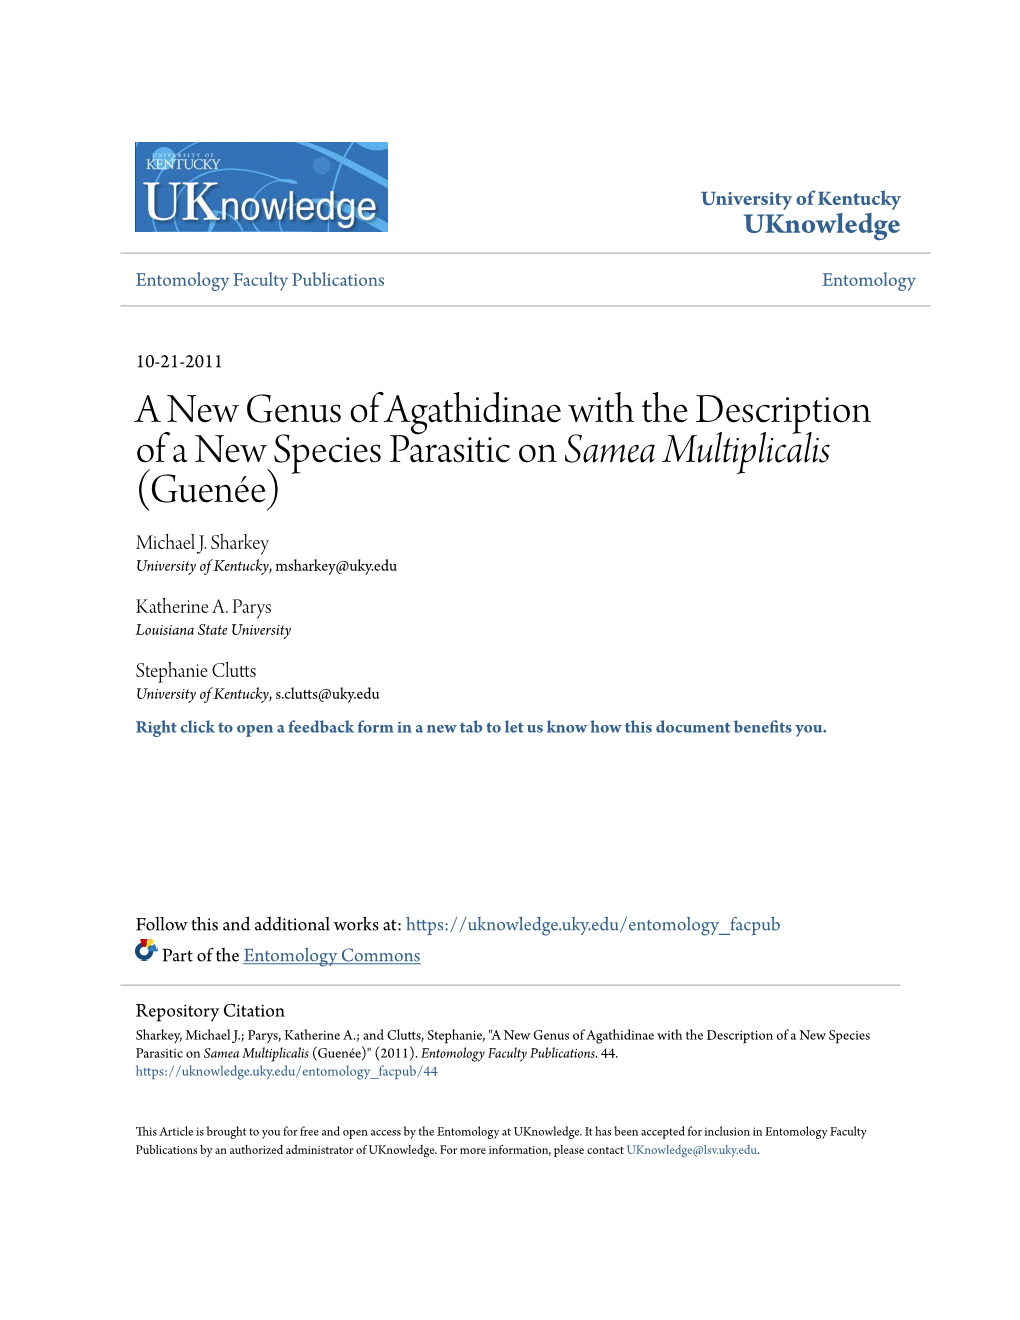 A New Genus of Agathidinae with the Description of a New Species Parasitic on Samea Multiplicalis (Guenée) Michael J